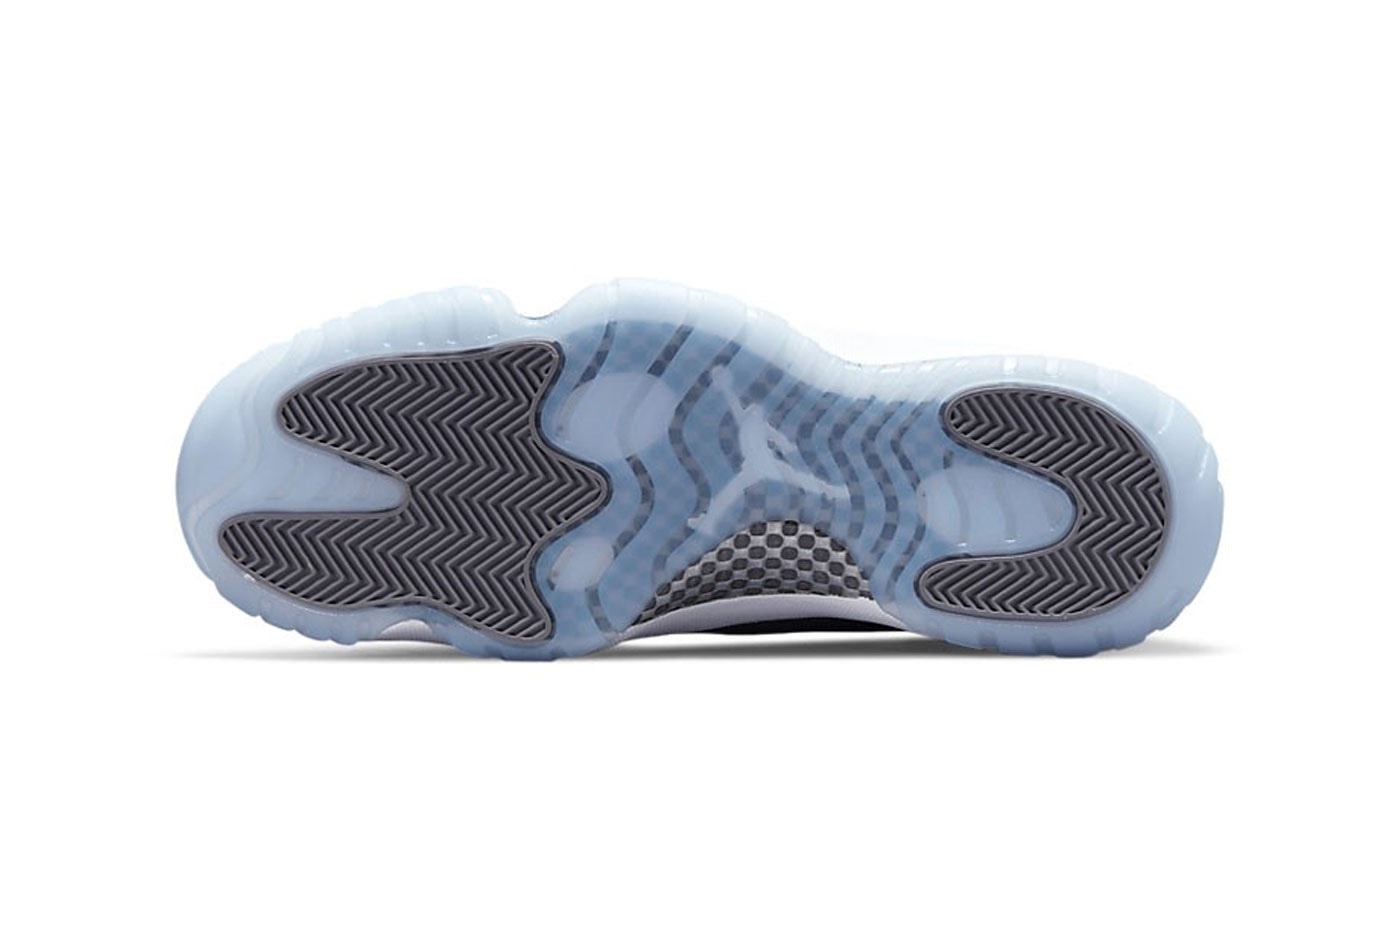 Official Look at the Air Jordan 11 “Cool Grey” Footwear 